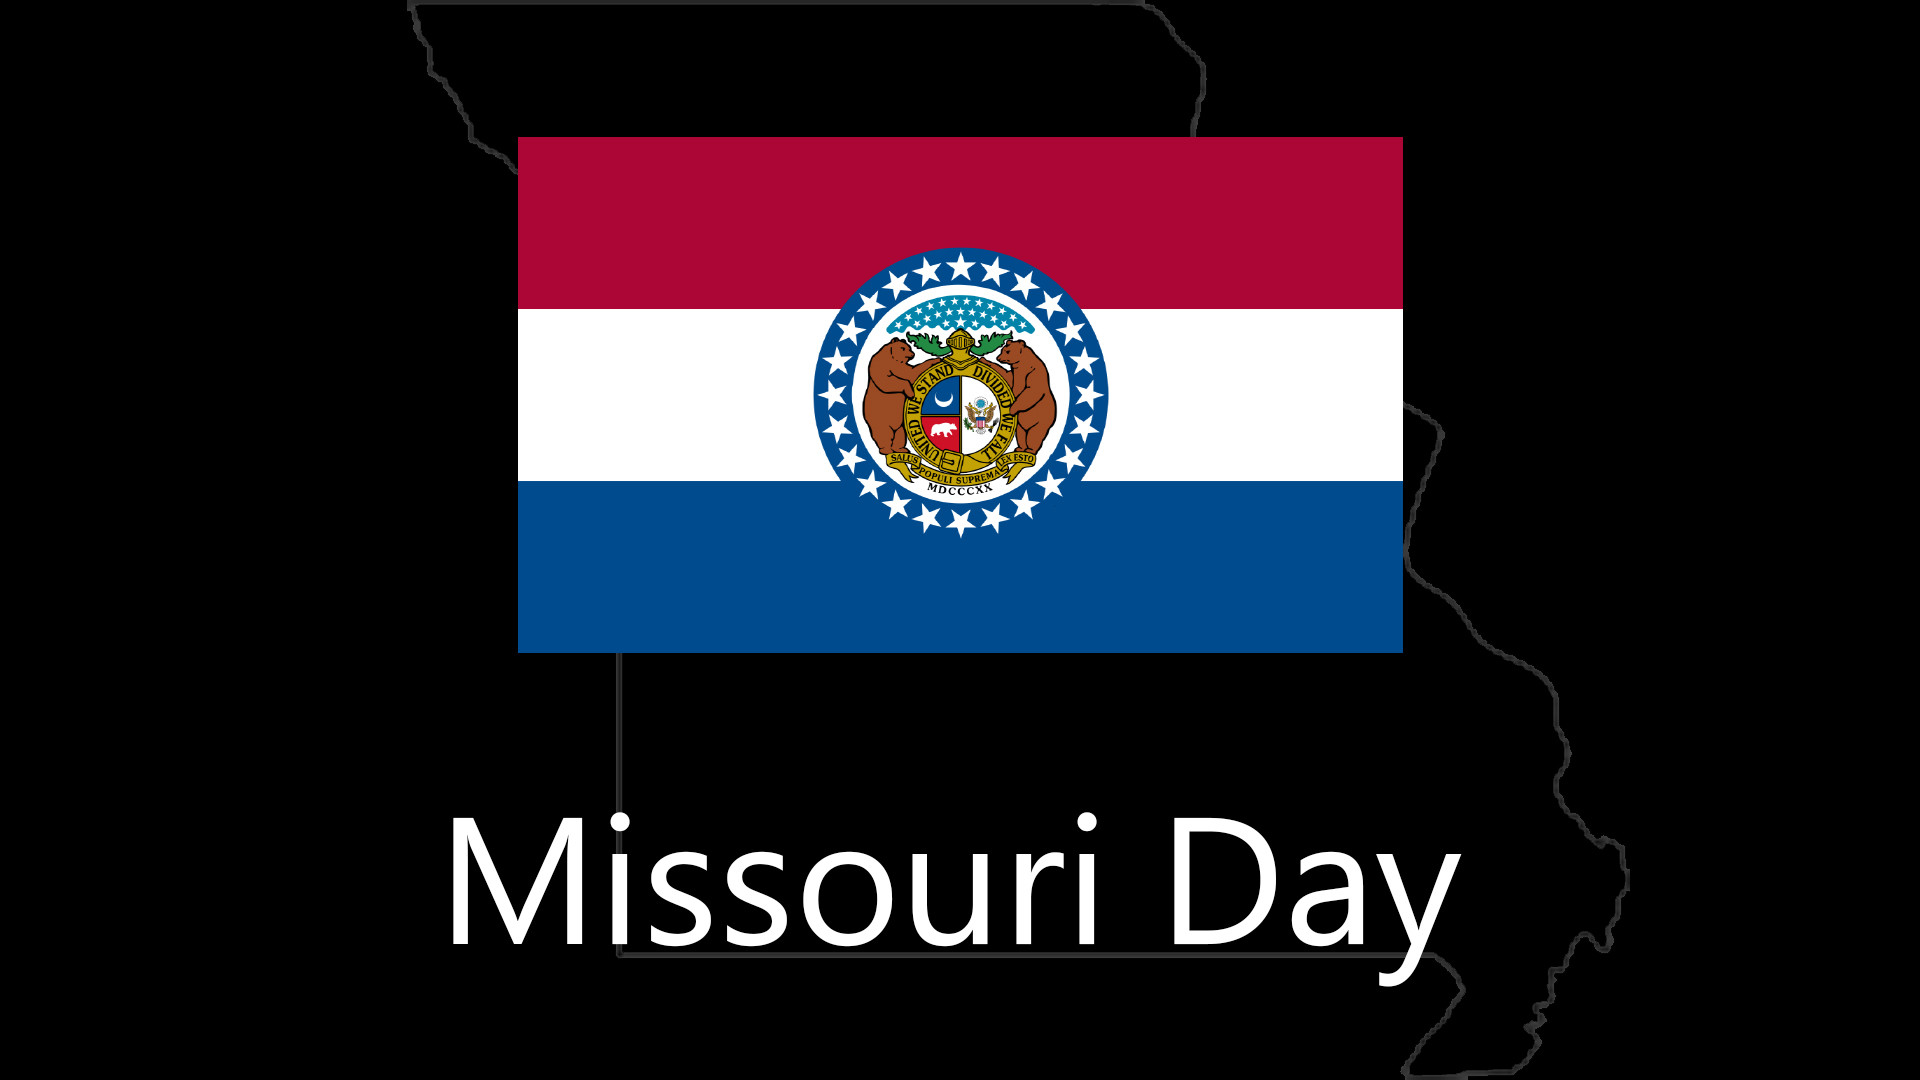 Missouri Day List Of National Days